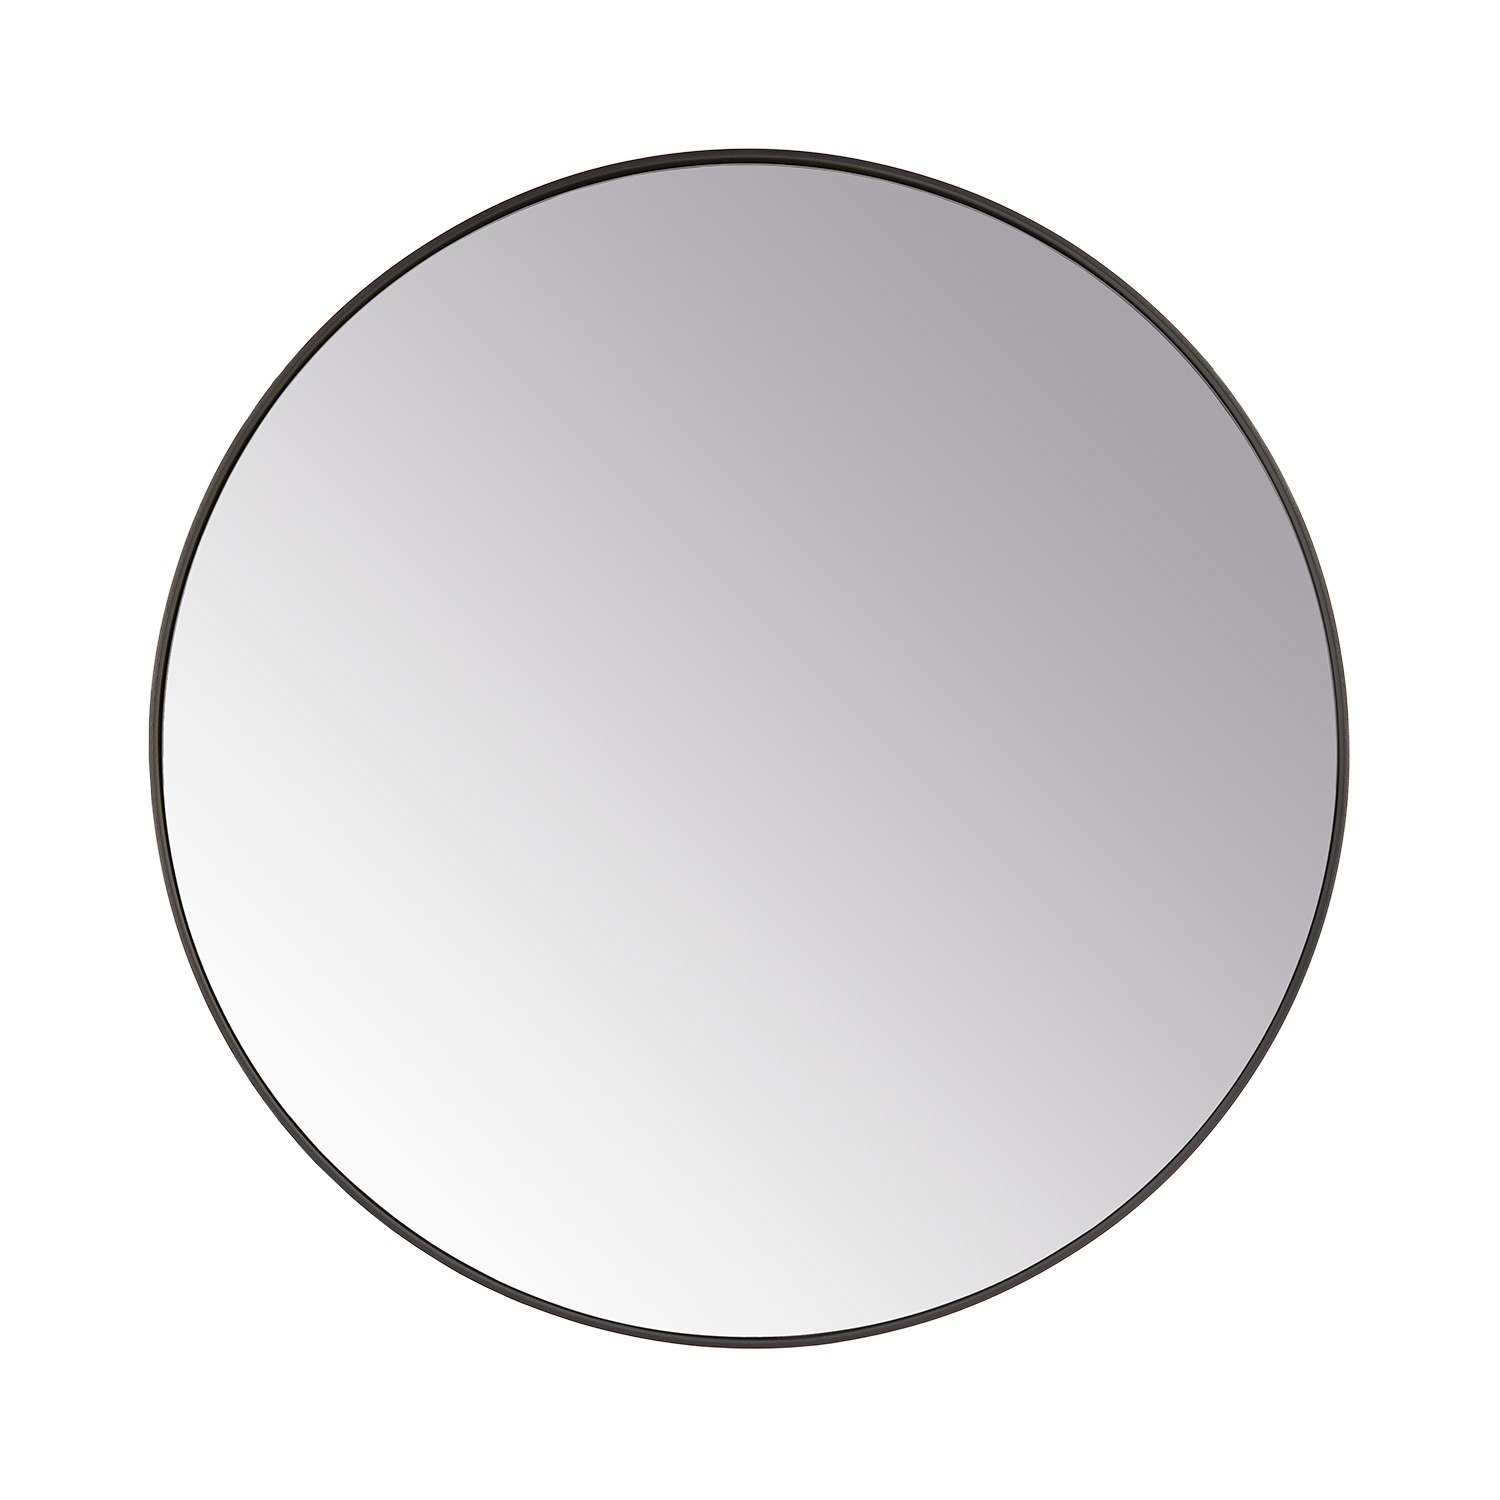 91251228 Зеркало настенное круглое V20113 Орбита STLM-0521712 RUNDEN